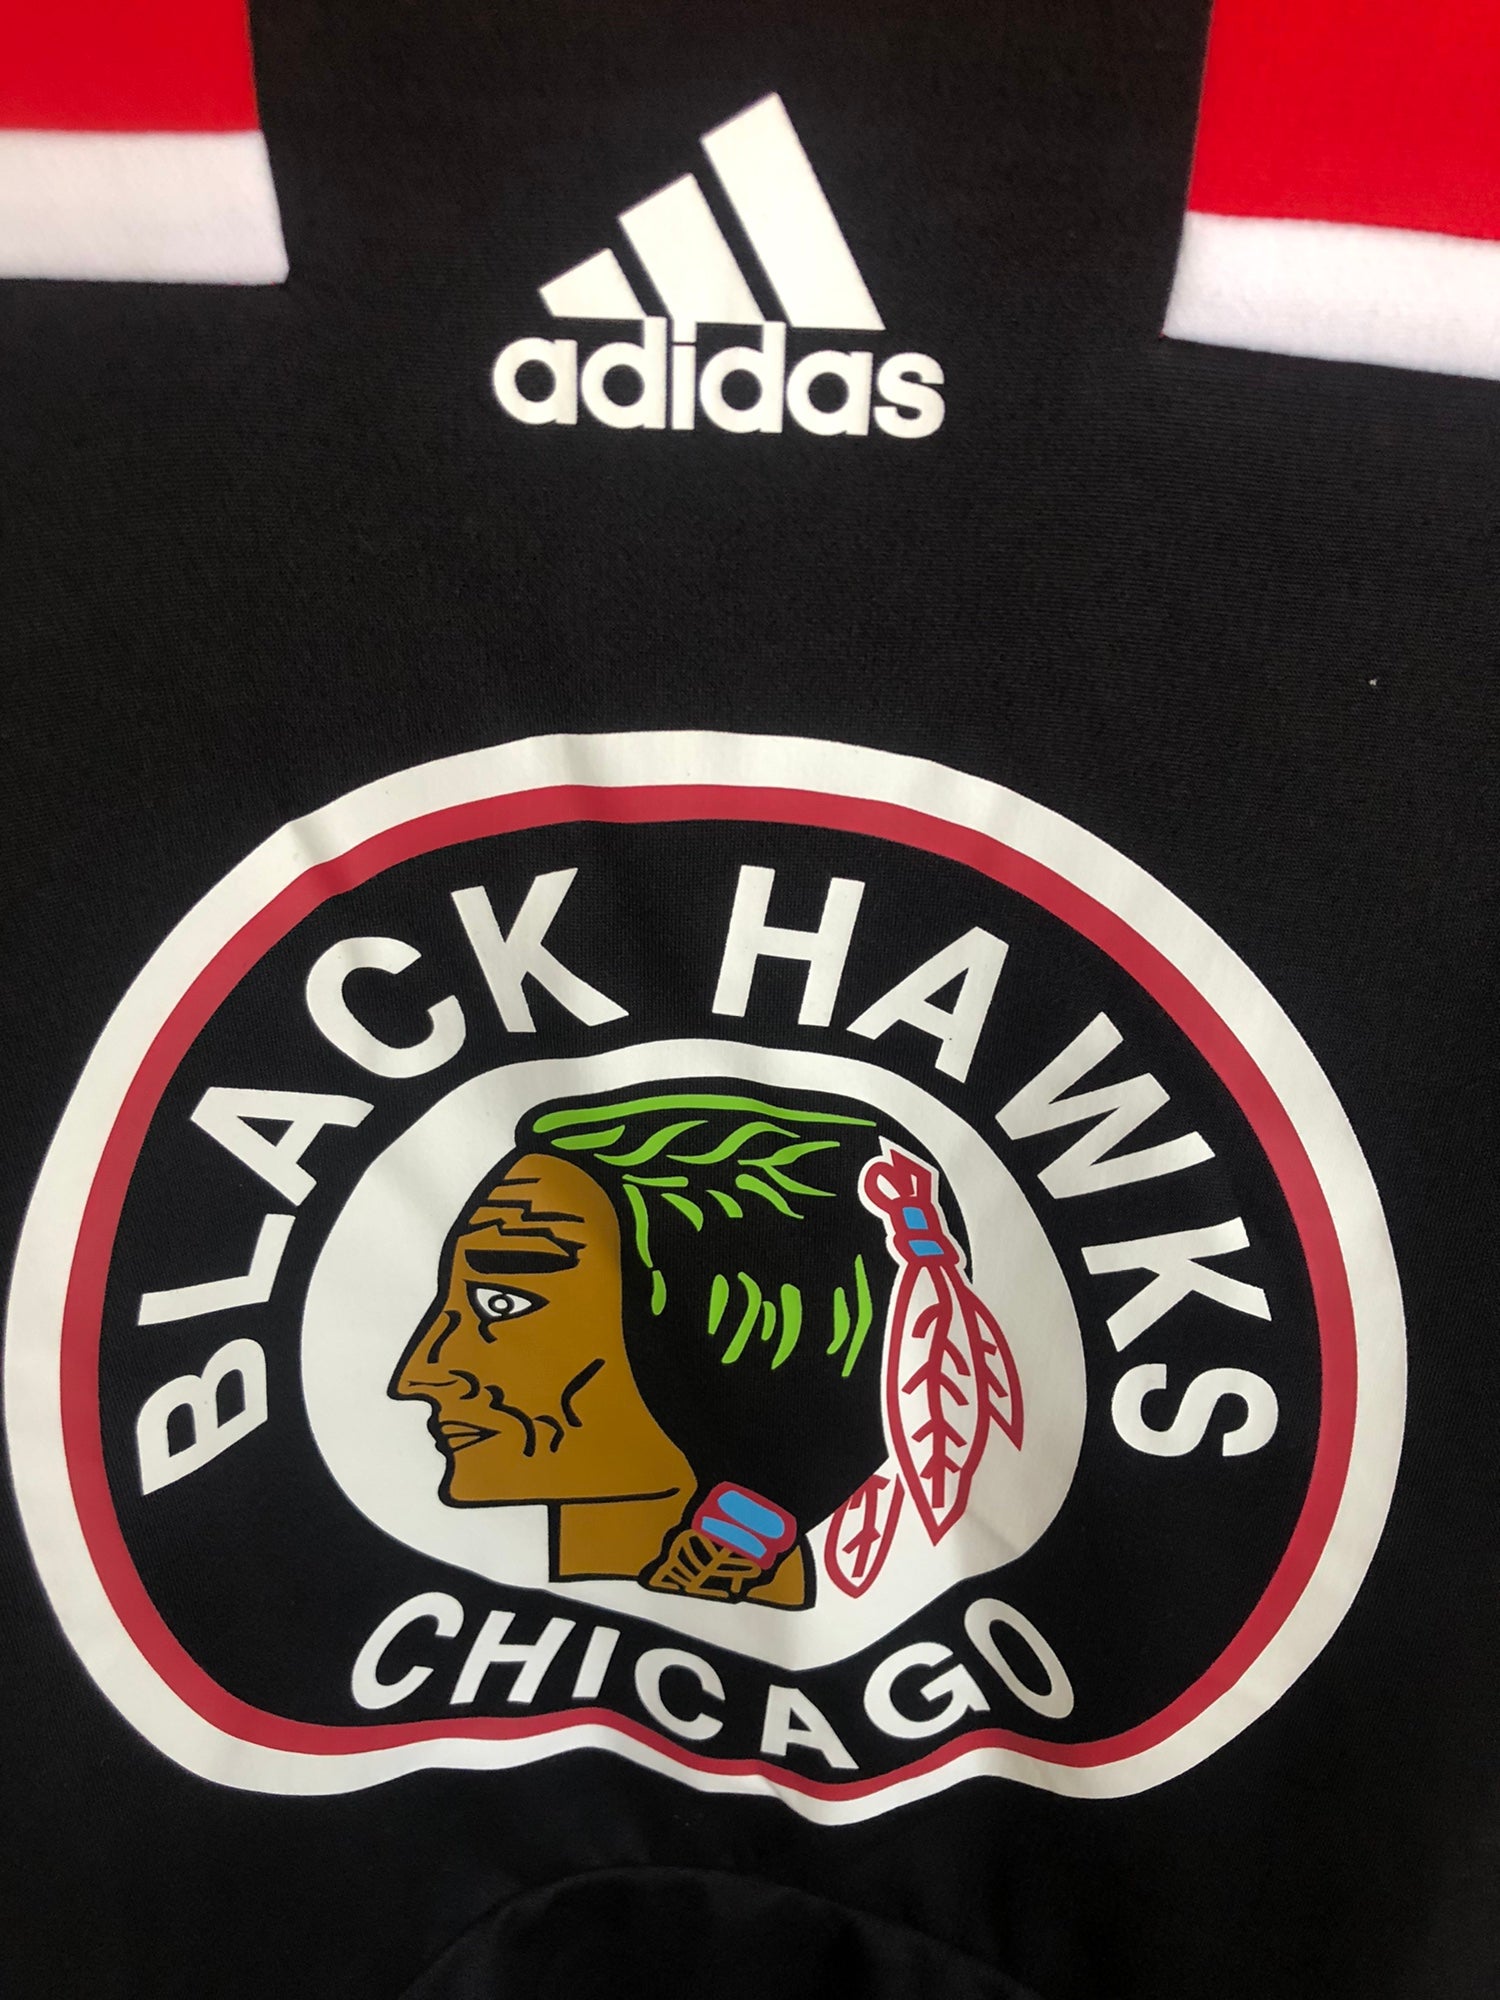  adidas Men's NHL Chicago Blackhawks Salute to Service Hockey  Hoodie Hoody (S) Green : Sports & Outdoors